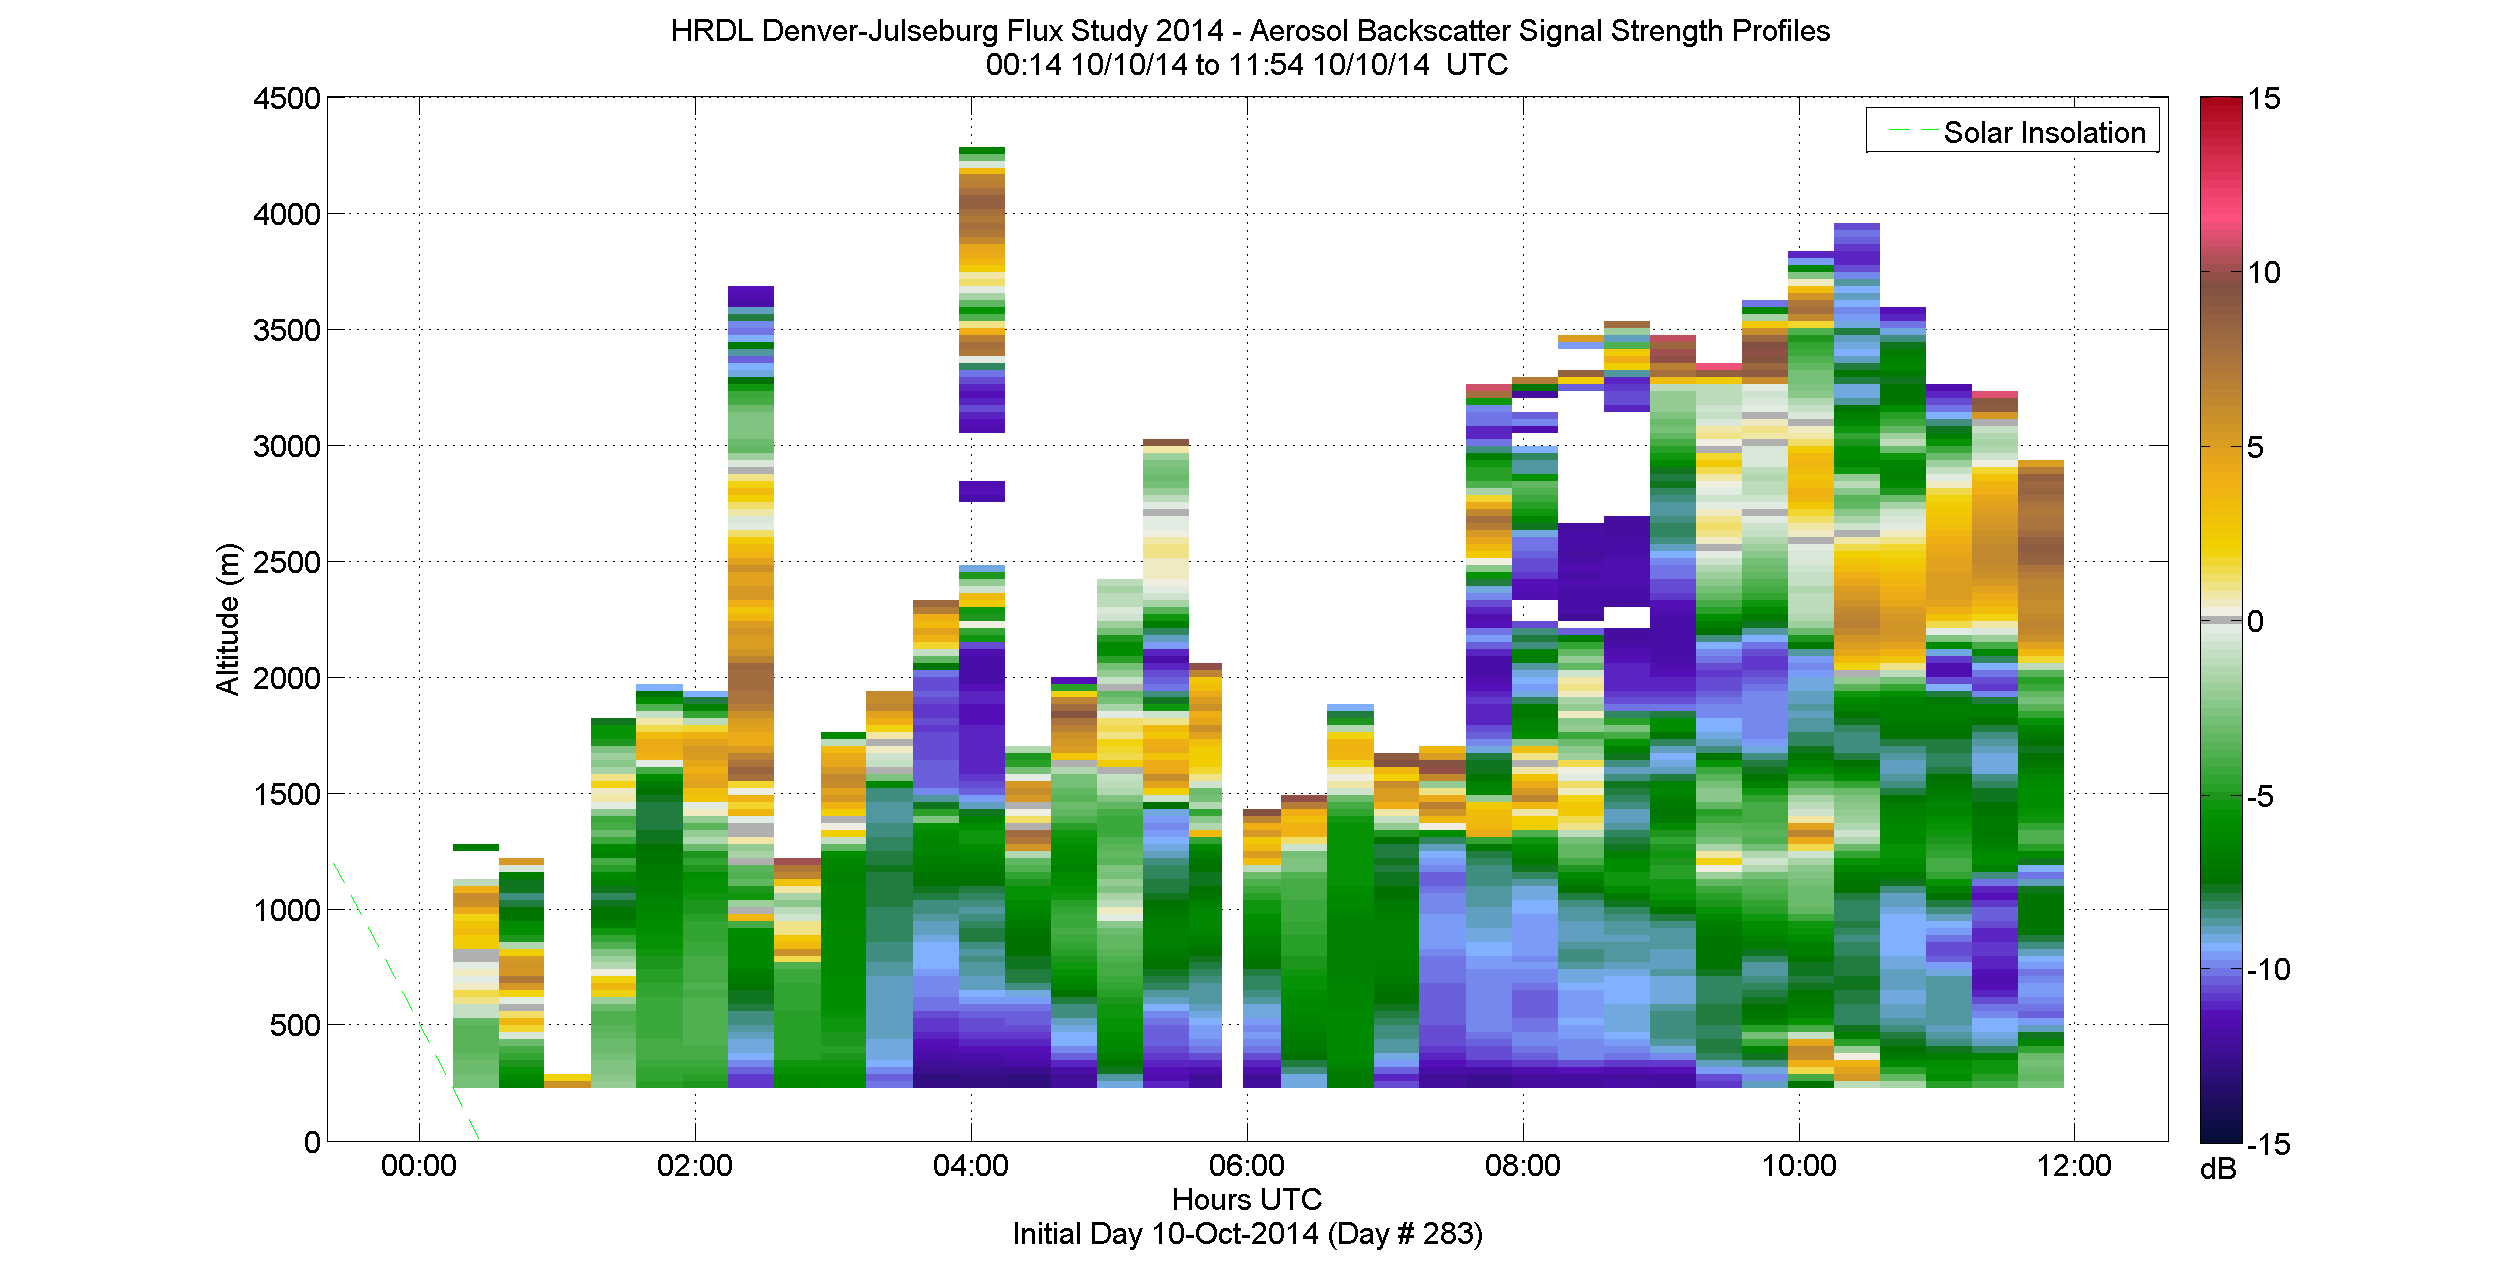 HRDL vertical intensity profile - October 10 am